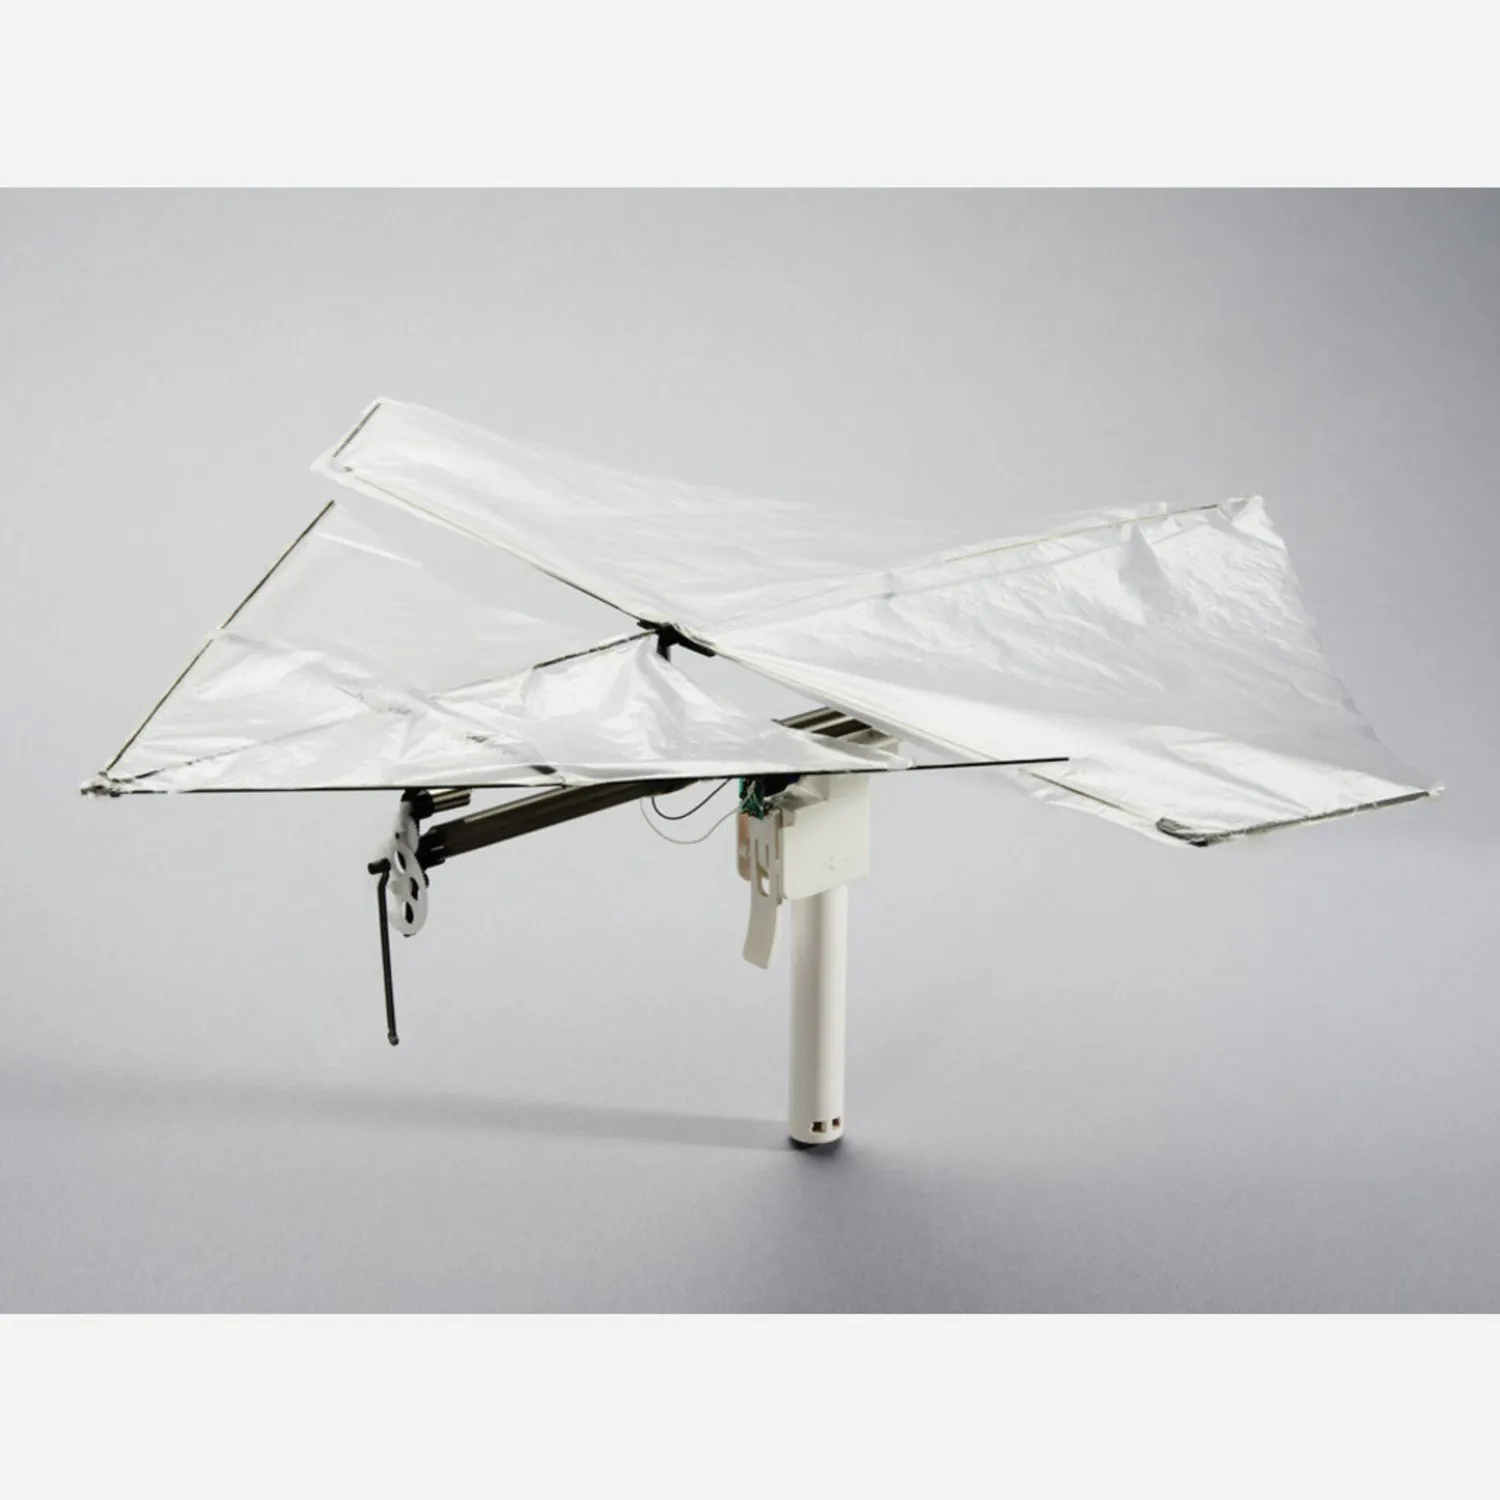 Photo of Delta Twister Flying Machine Kit by Gakken